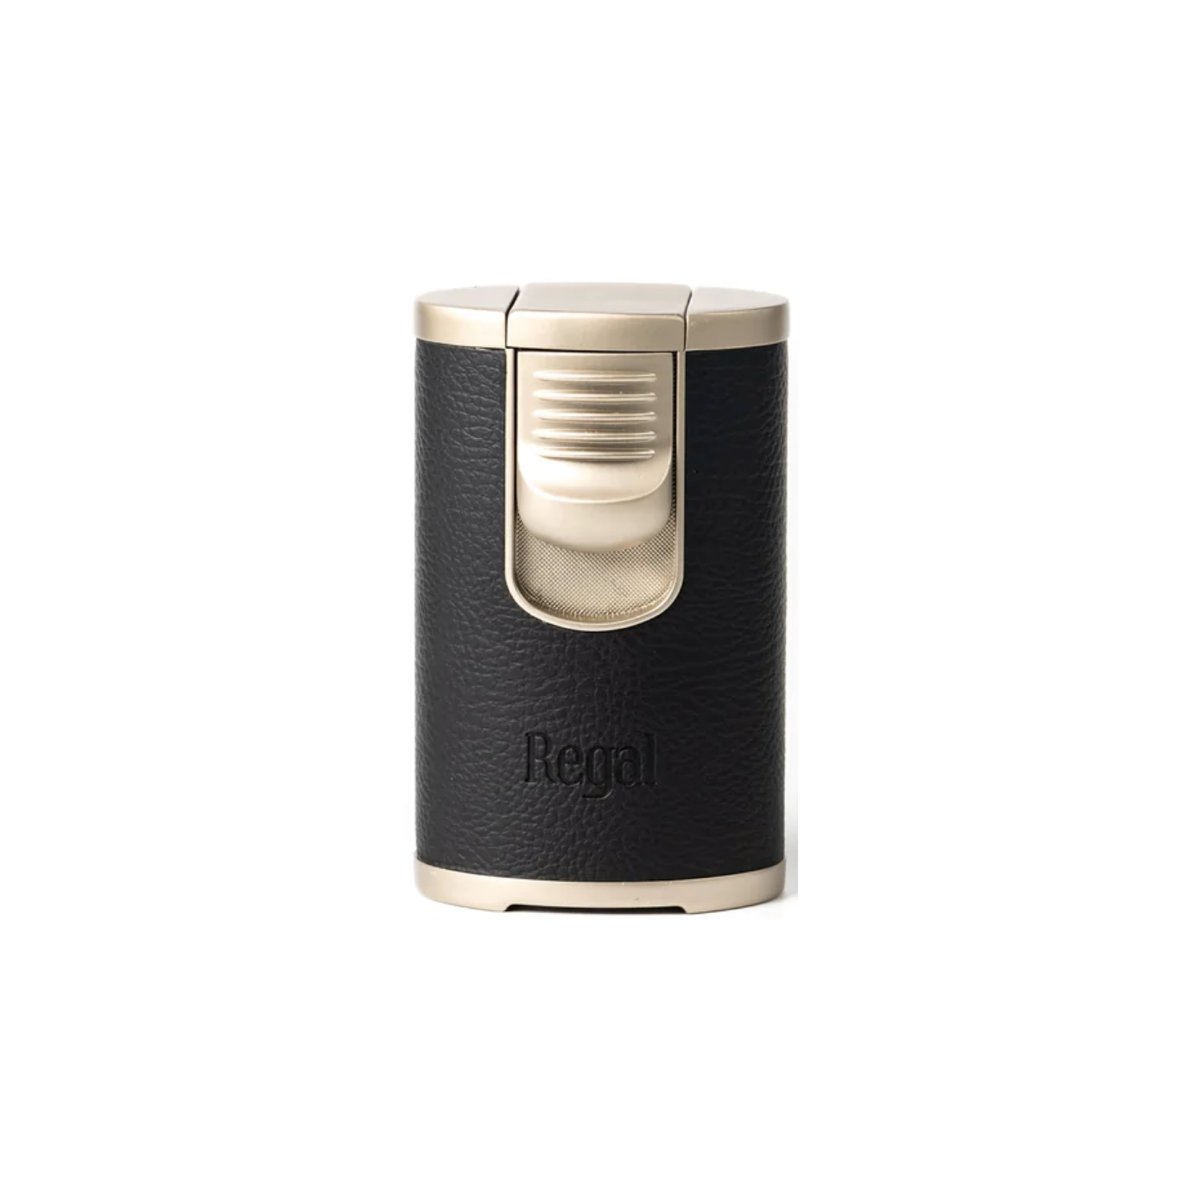 Regal Quad Flame Table Lighter